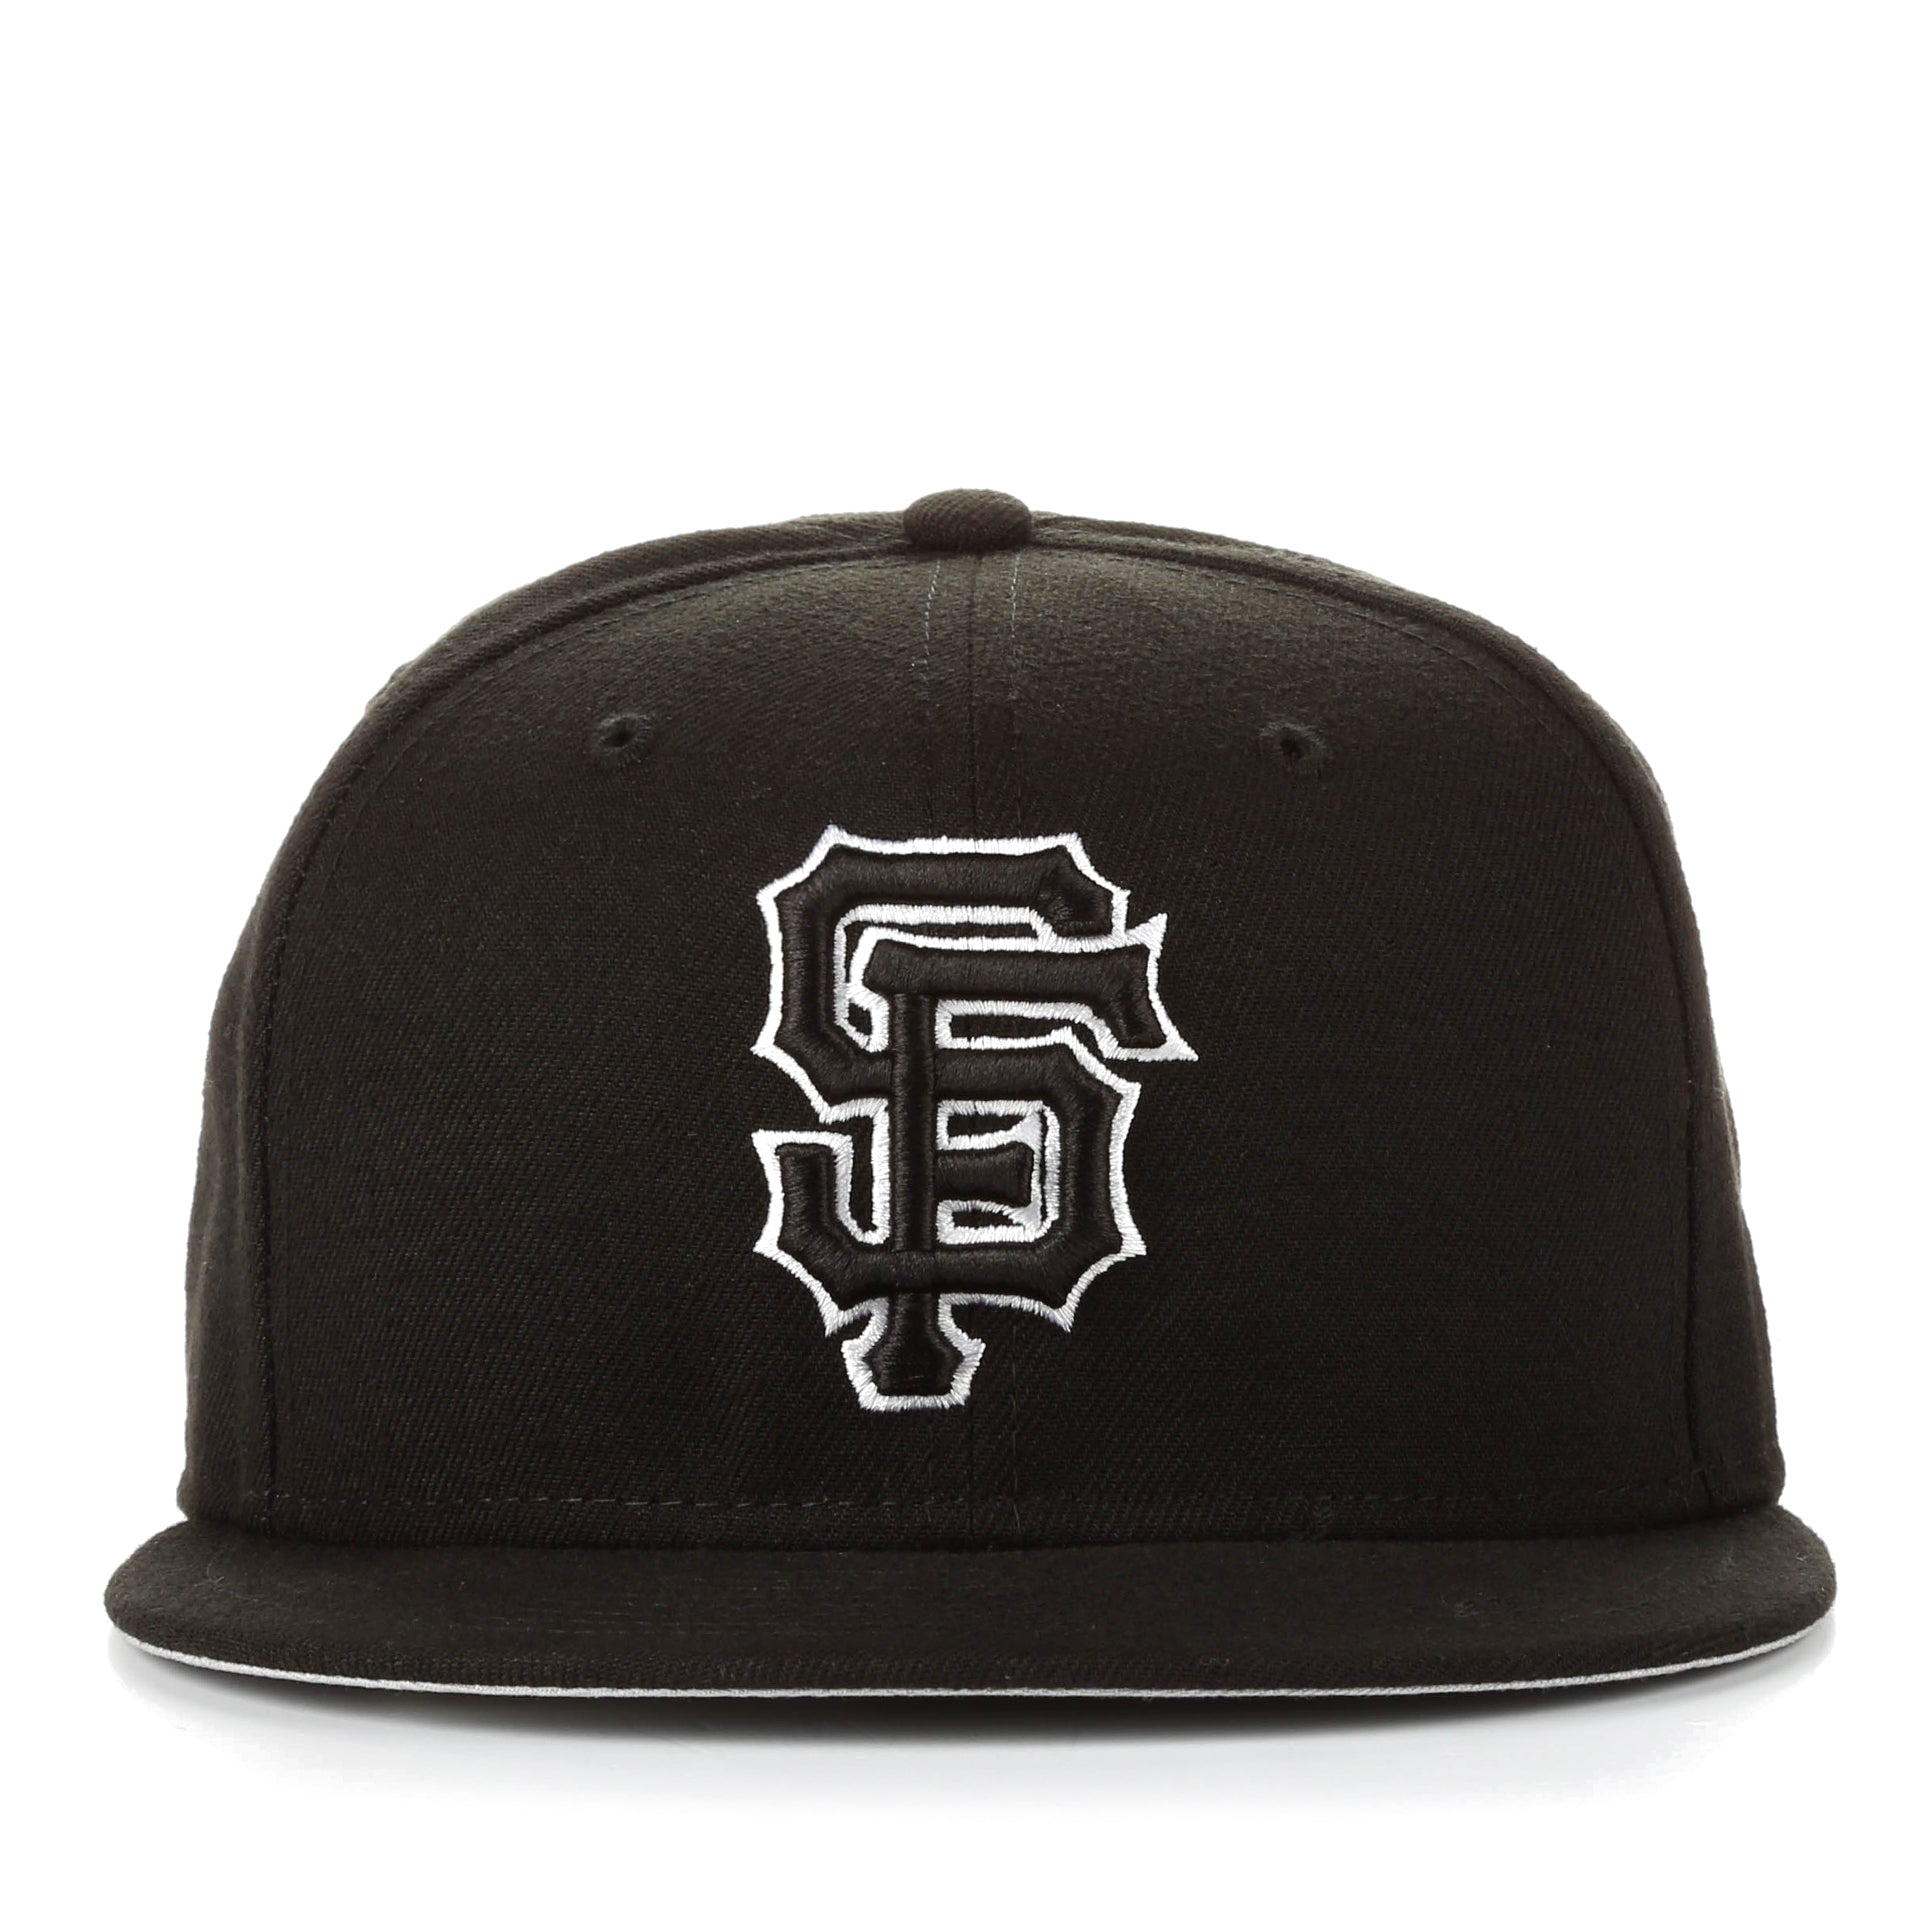 Black Giants New Era Hat 5950 